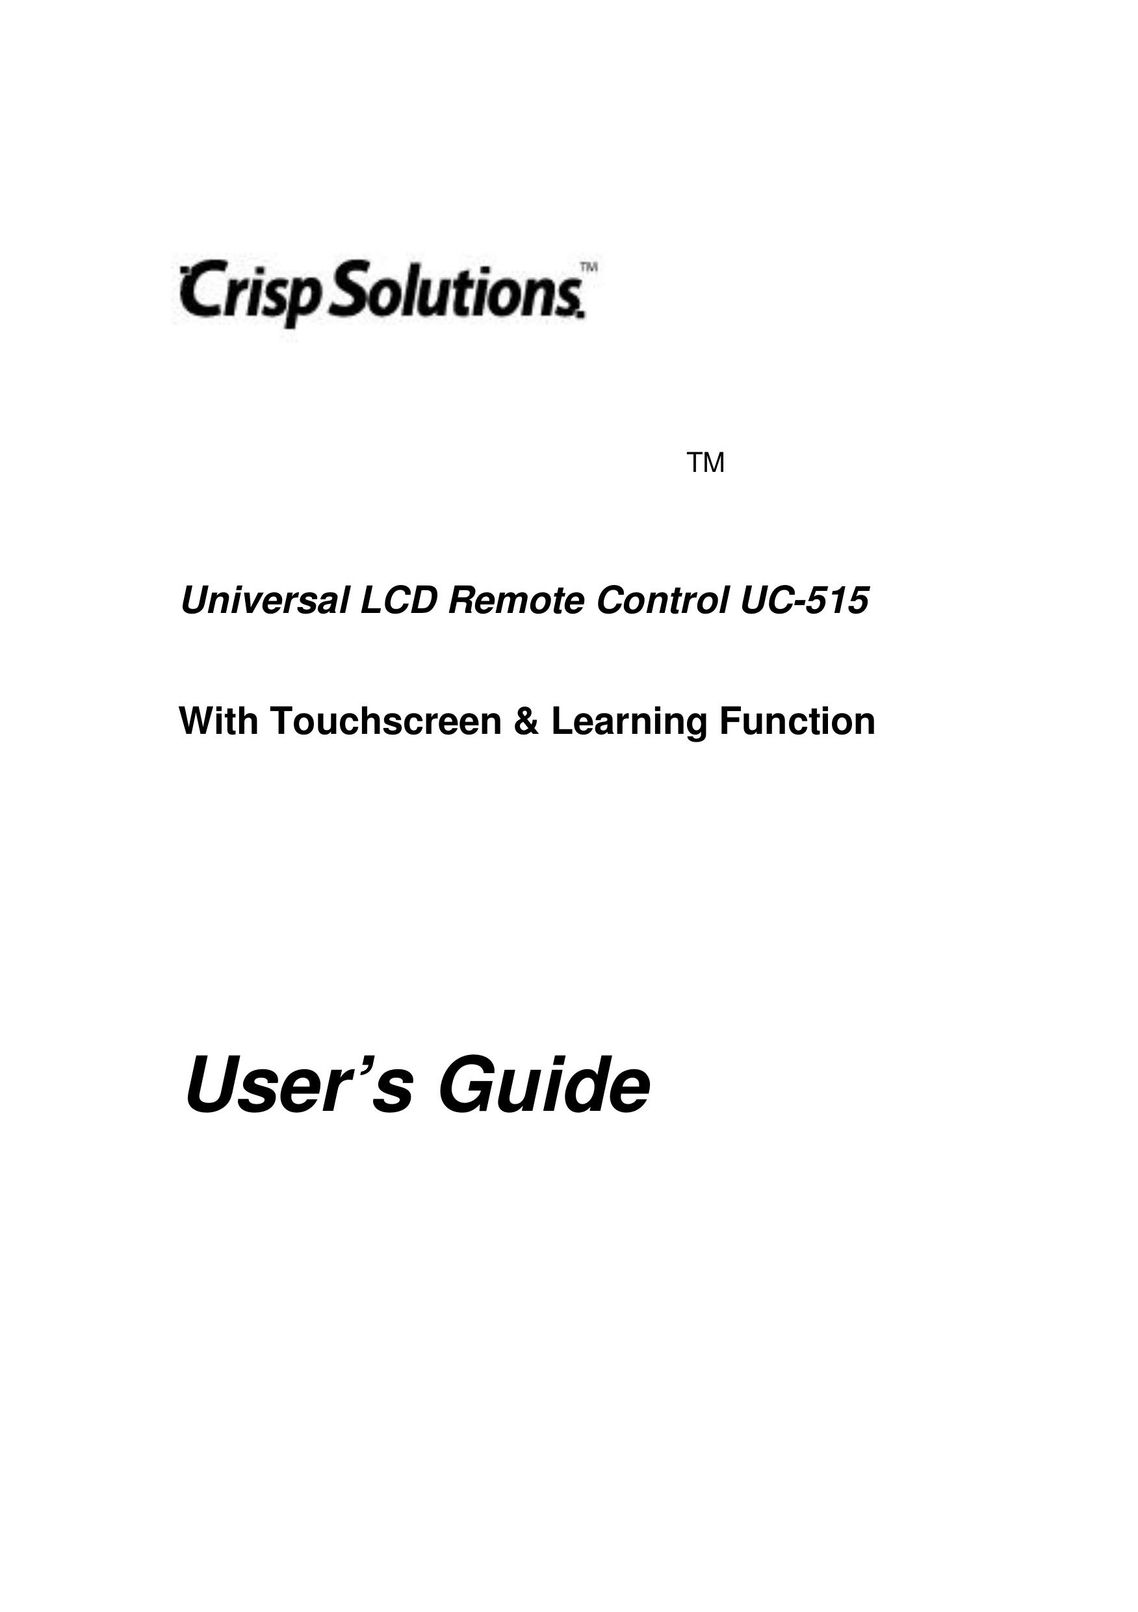 Crisp Solutions UC-515 Universal Remote User Manual